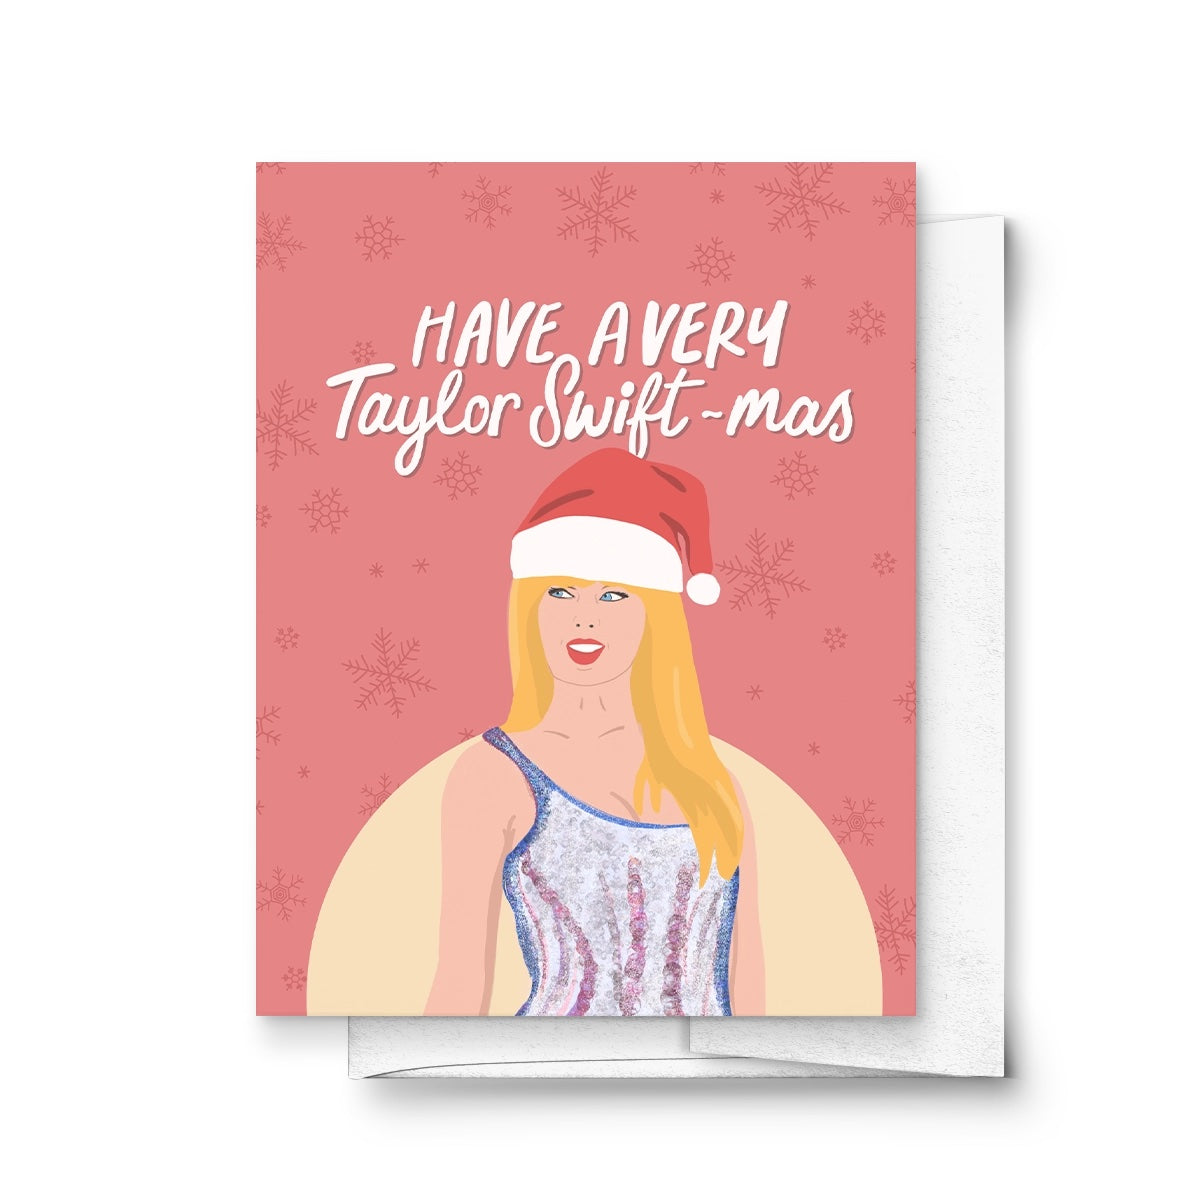 Taylor Swift-mas Christmas Holiday Greeting Card